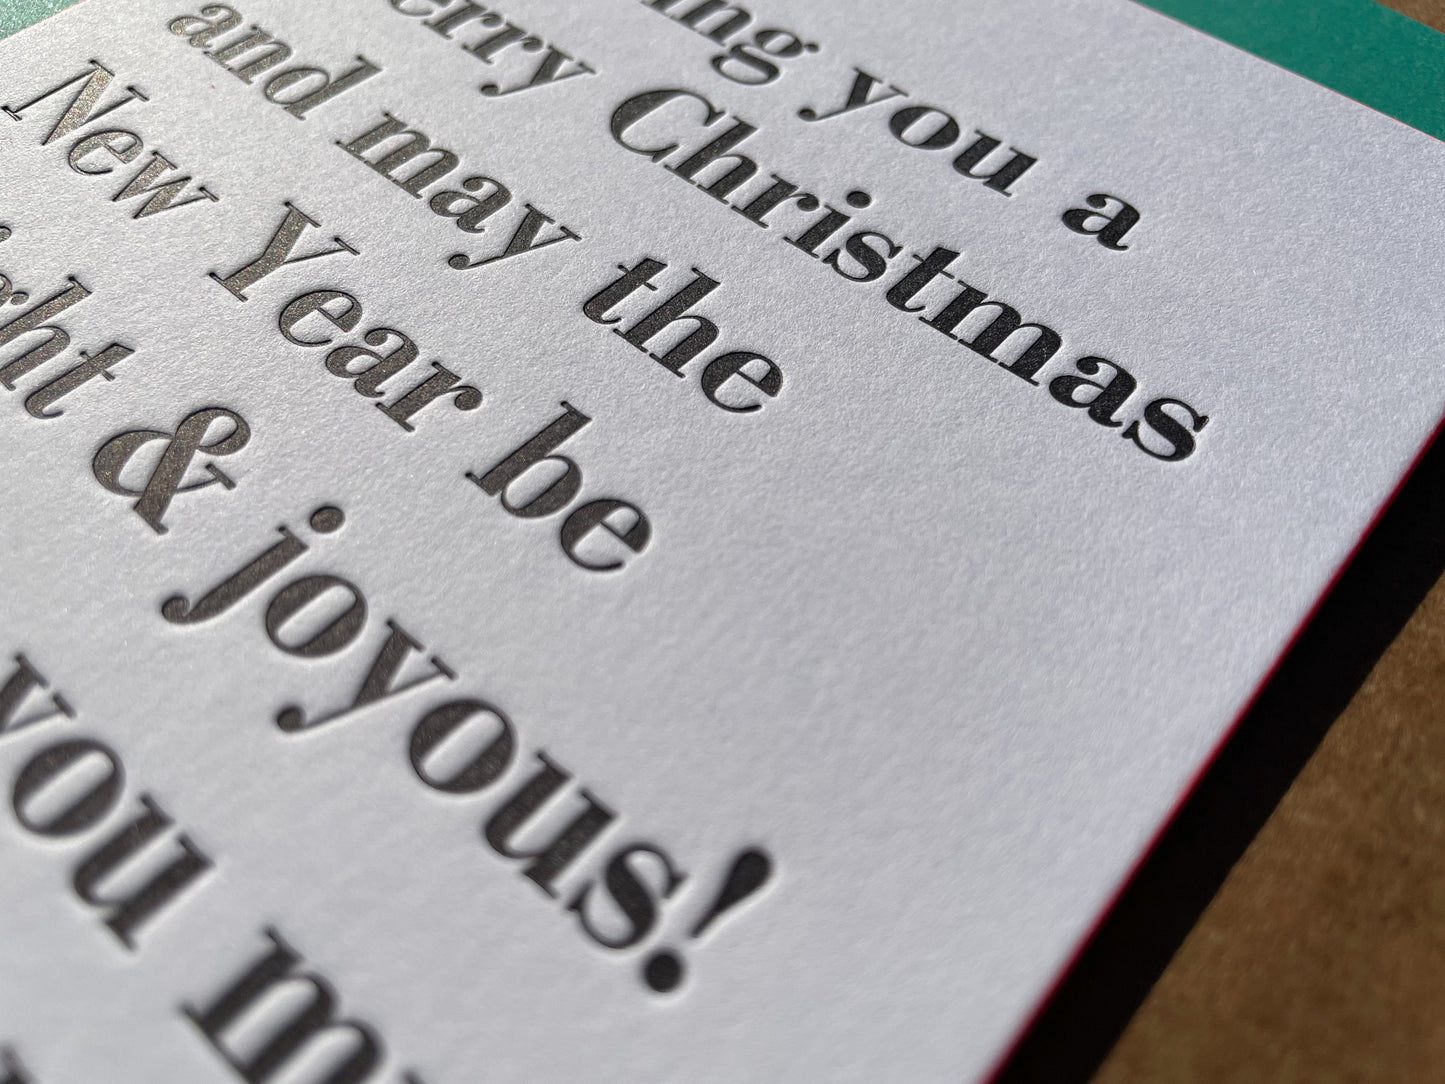 Wishing You A Merry Christmas Letterpress Notecard